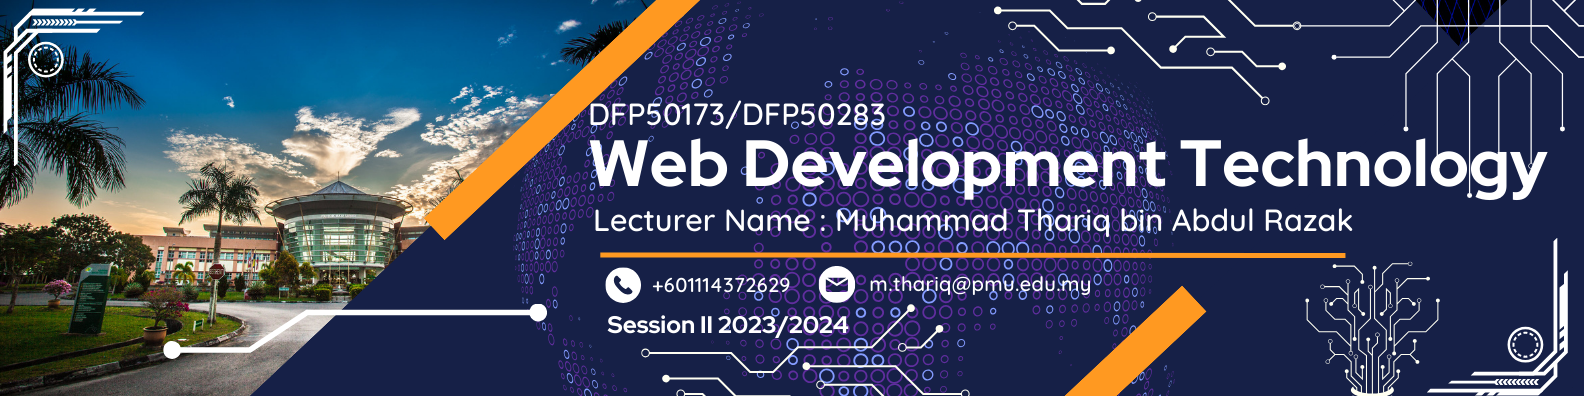 DFP50283 WEB DEVELOPMENT TECHNOLOGIES